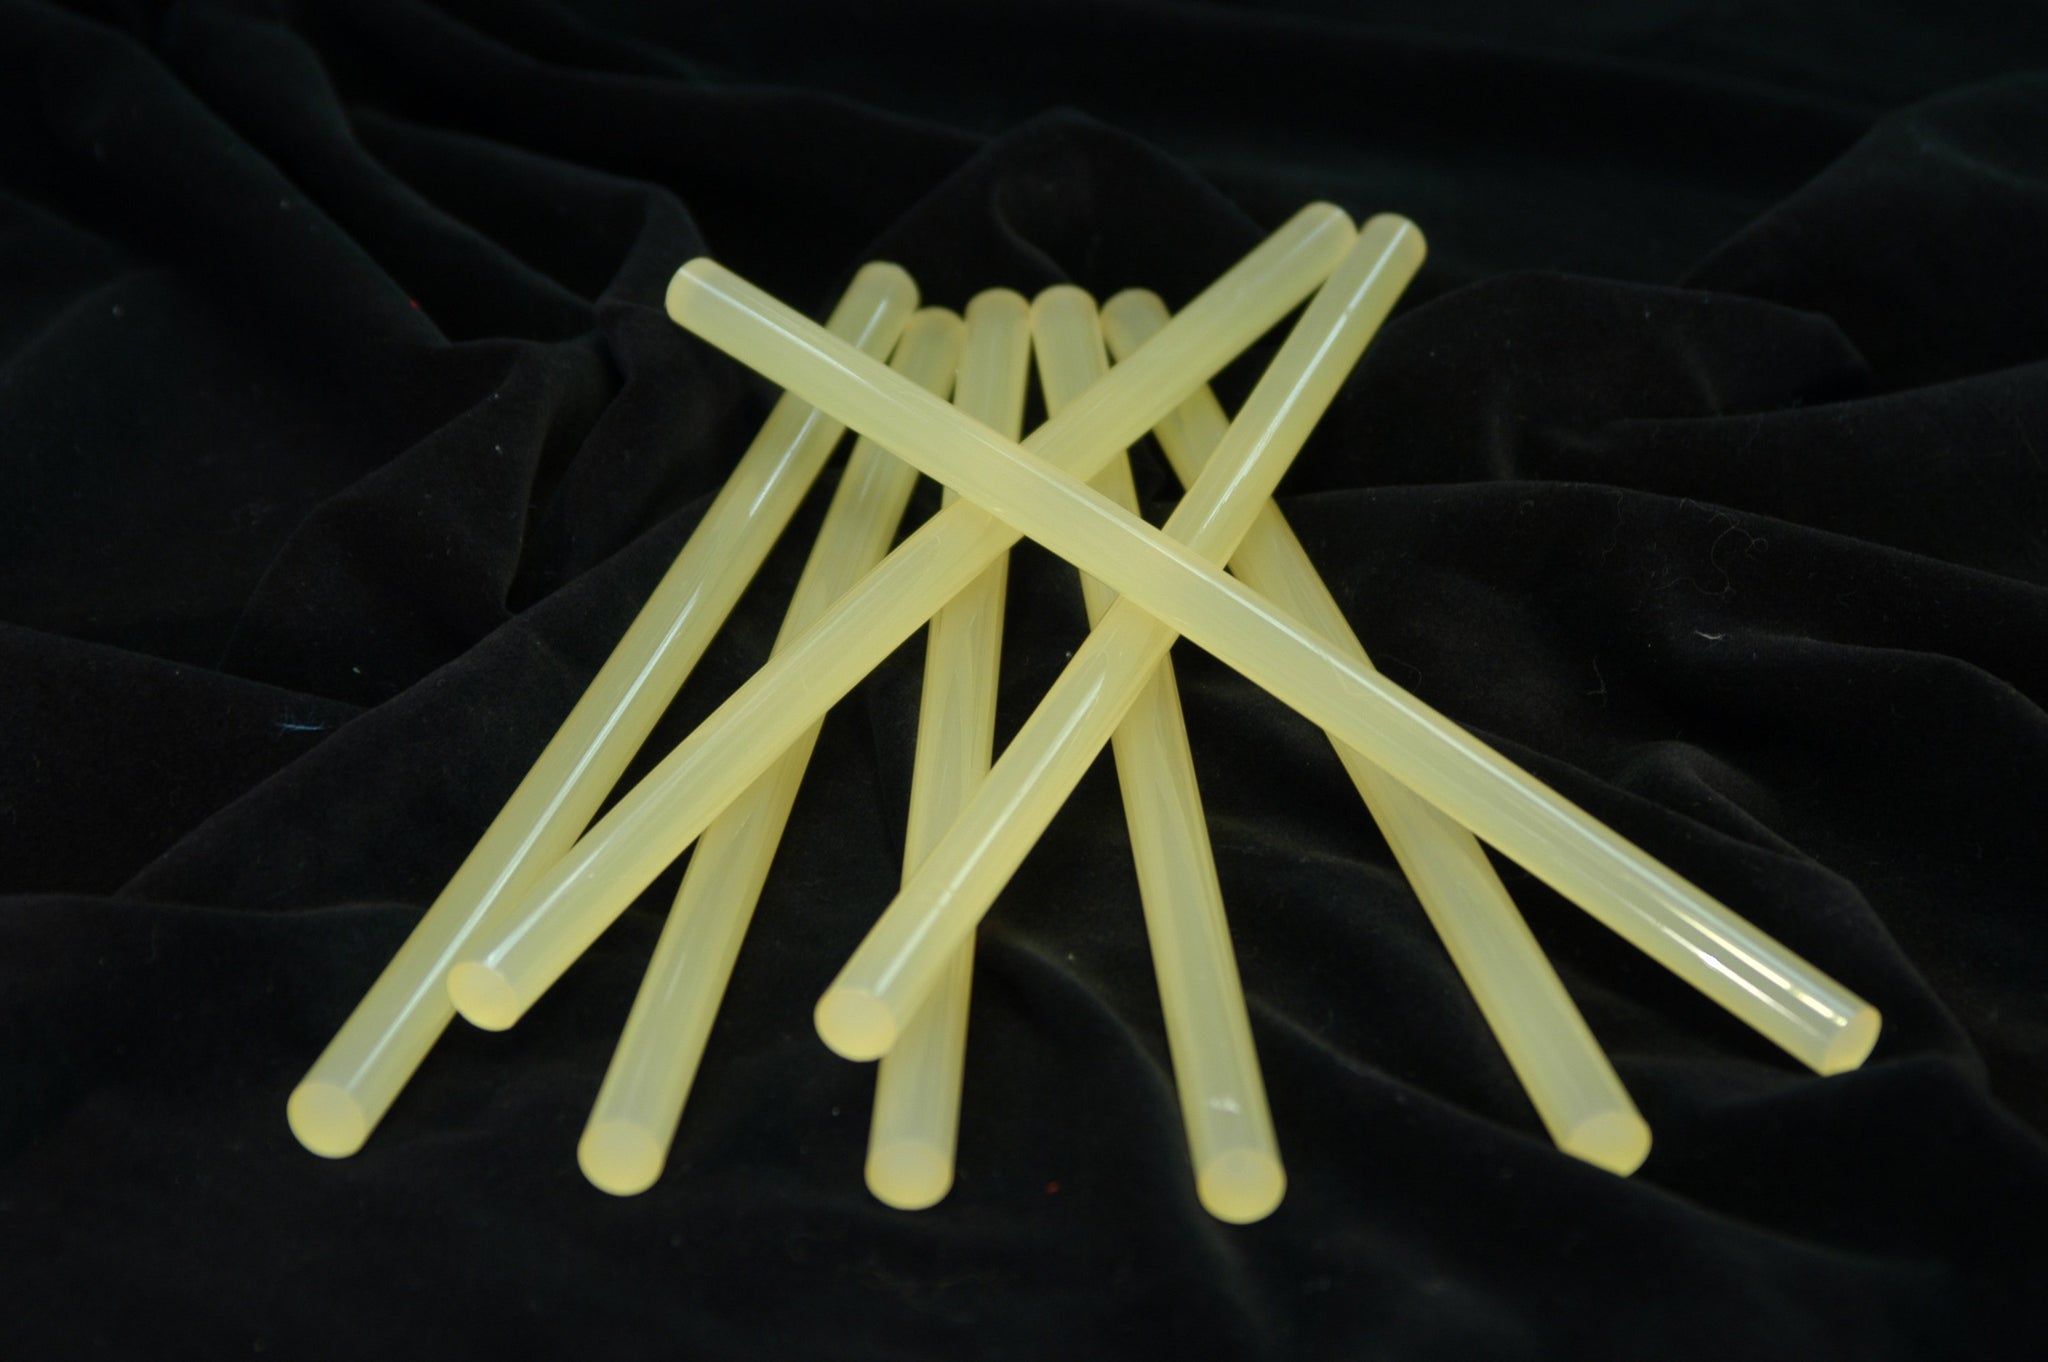 739 Hot Glue Sticks - High Strength Glue Stick - Amber ~ Hot Melt Company